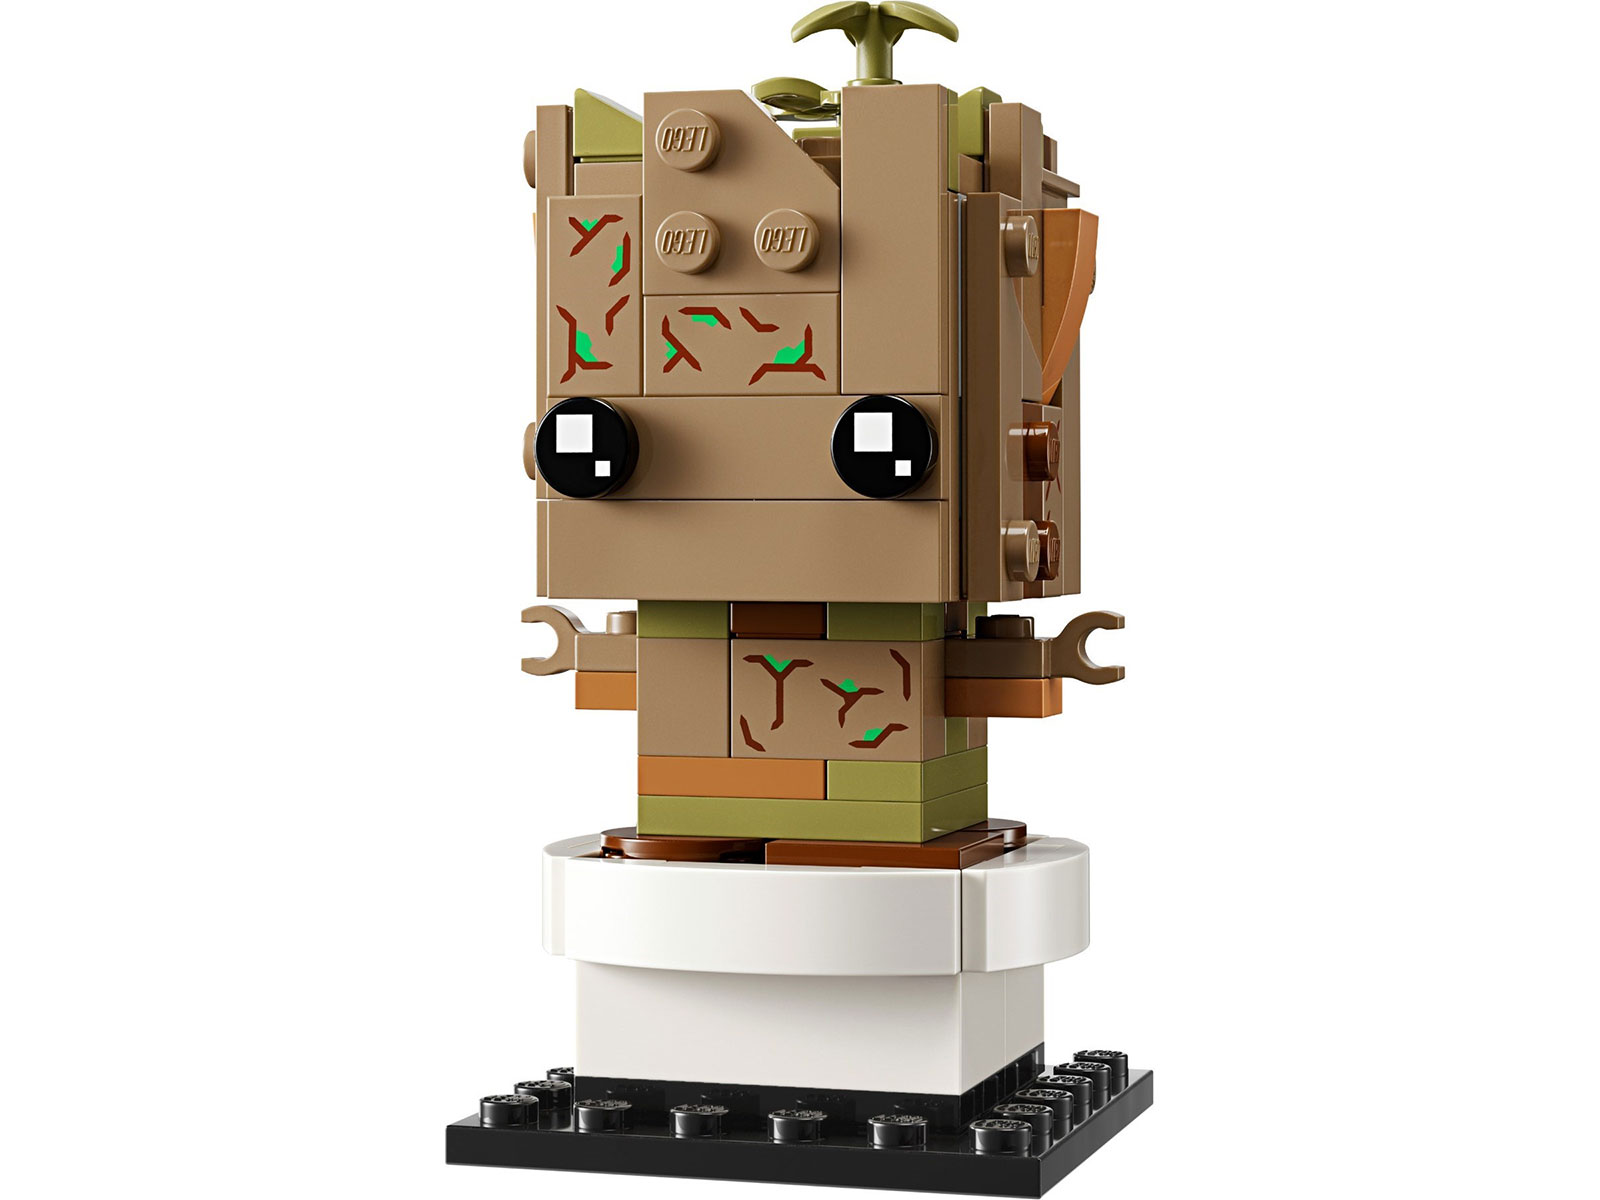 LEGO® BrickHeadz 40671 - Groot im Topf